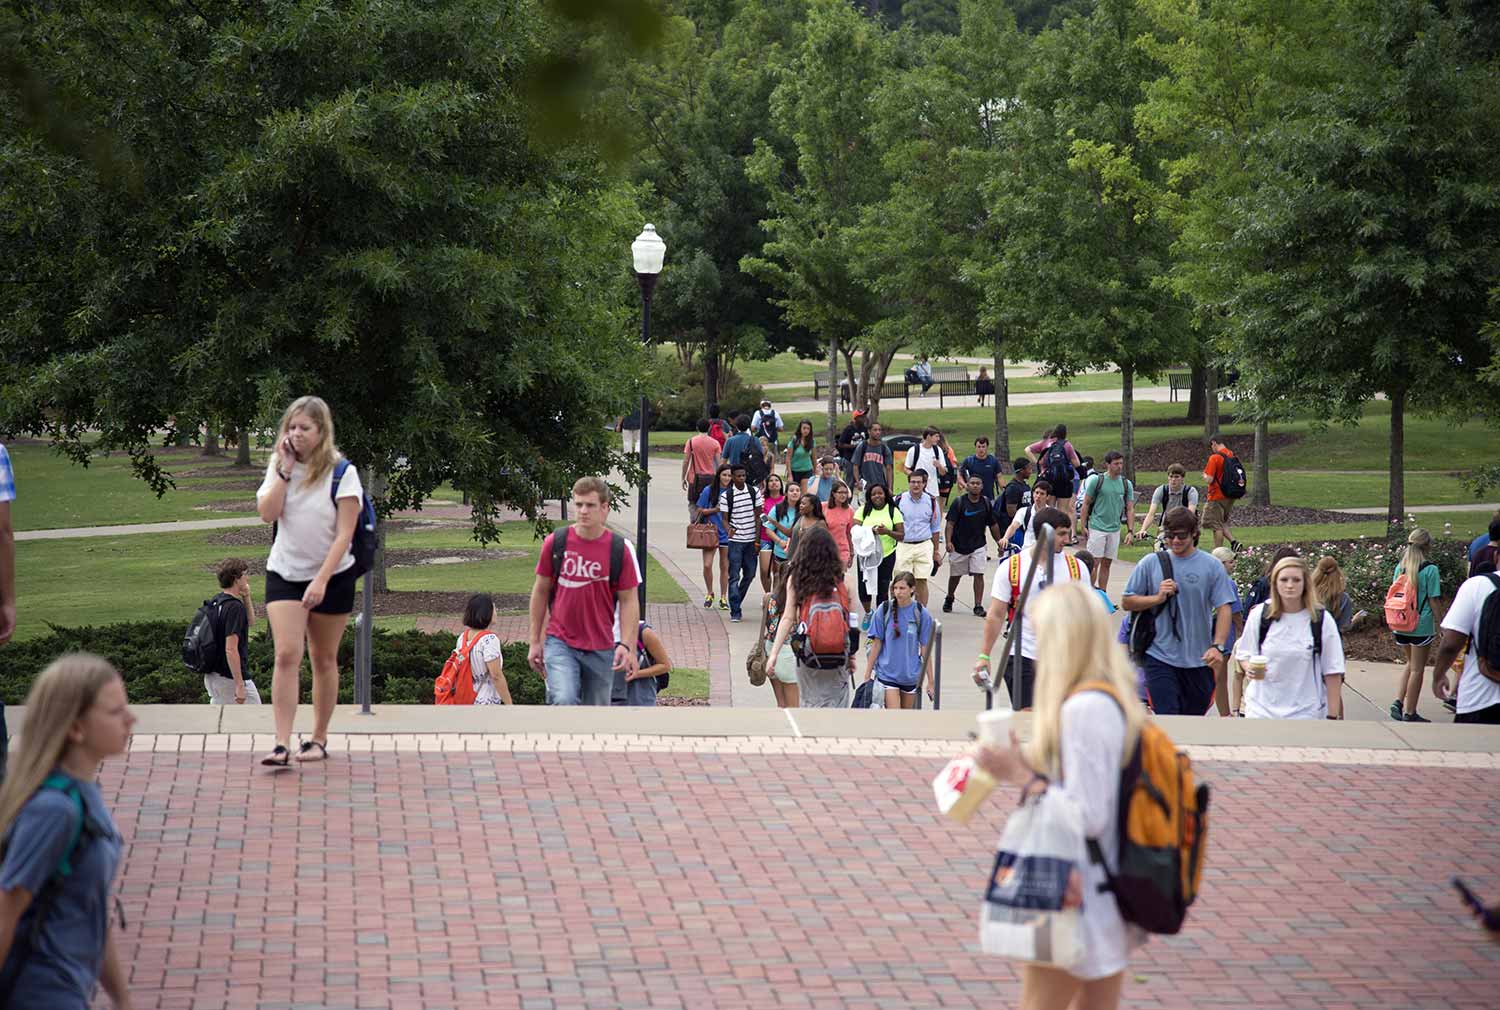 Several Students walking around campus